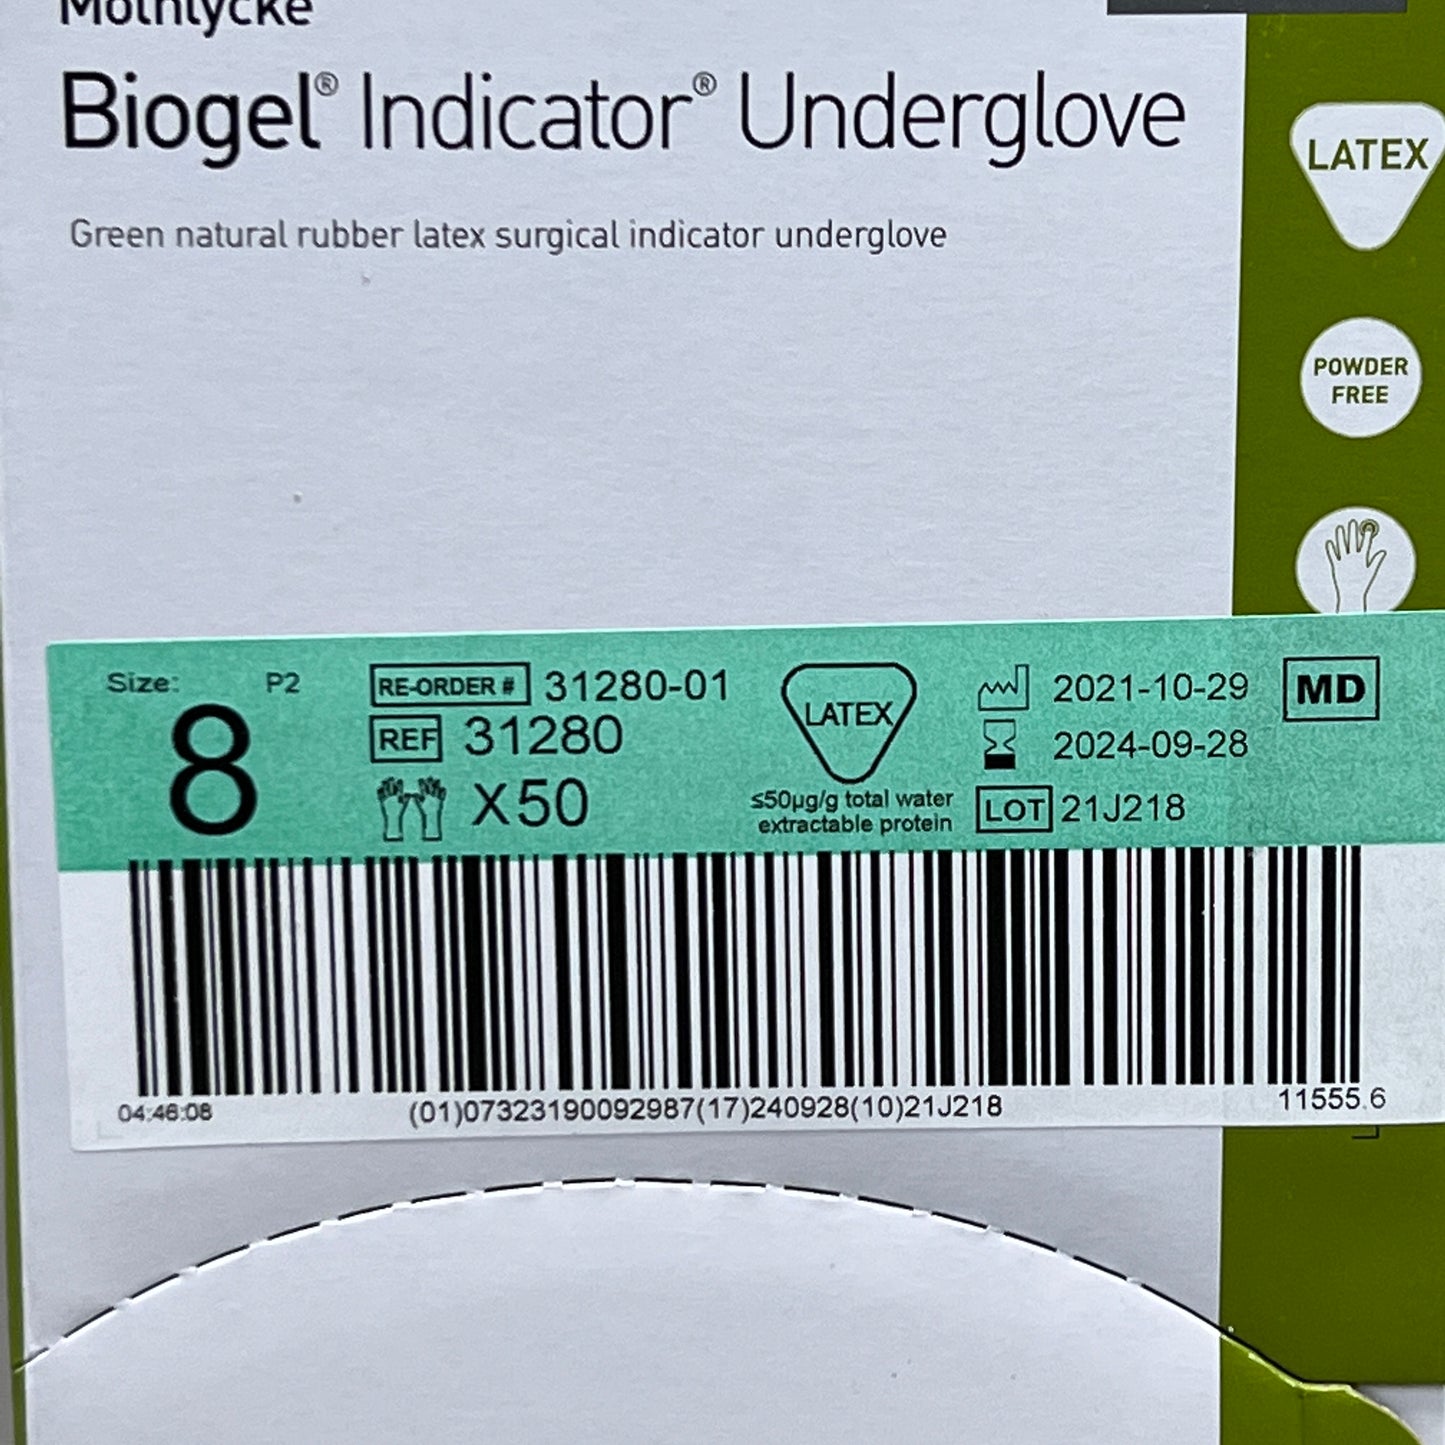 MOLNLYCKE Biogel Latex Surgical Indicator Underglove SZ 8 Green 50 Pairs 31280 (New)